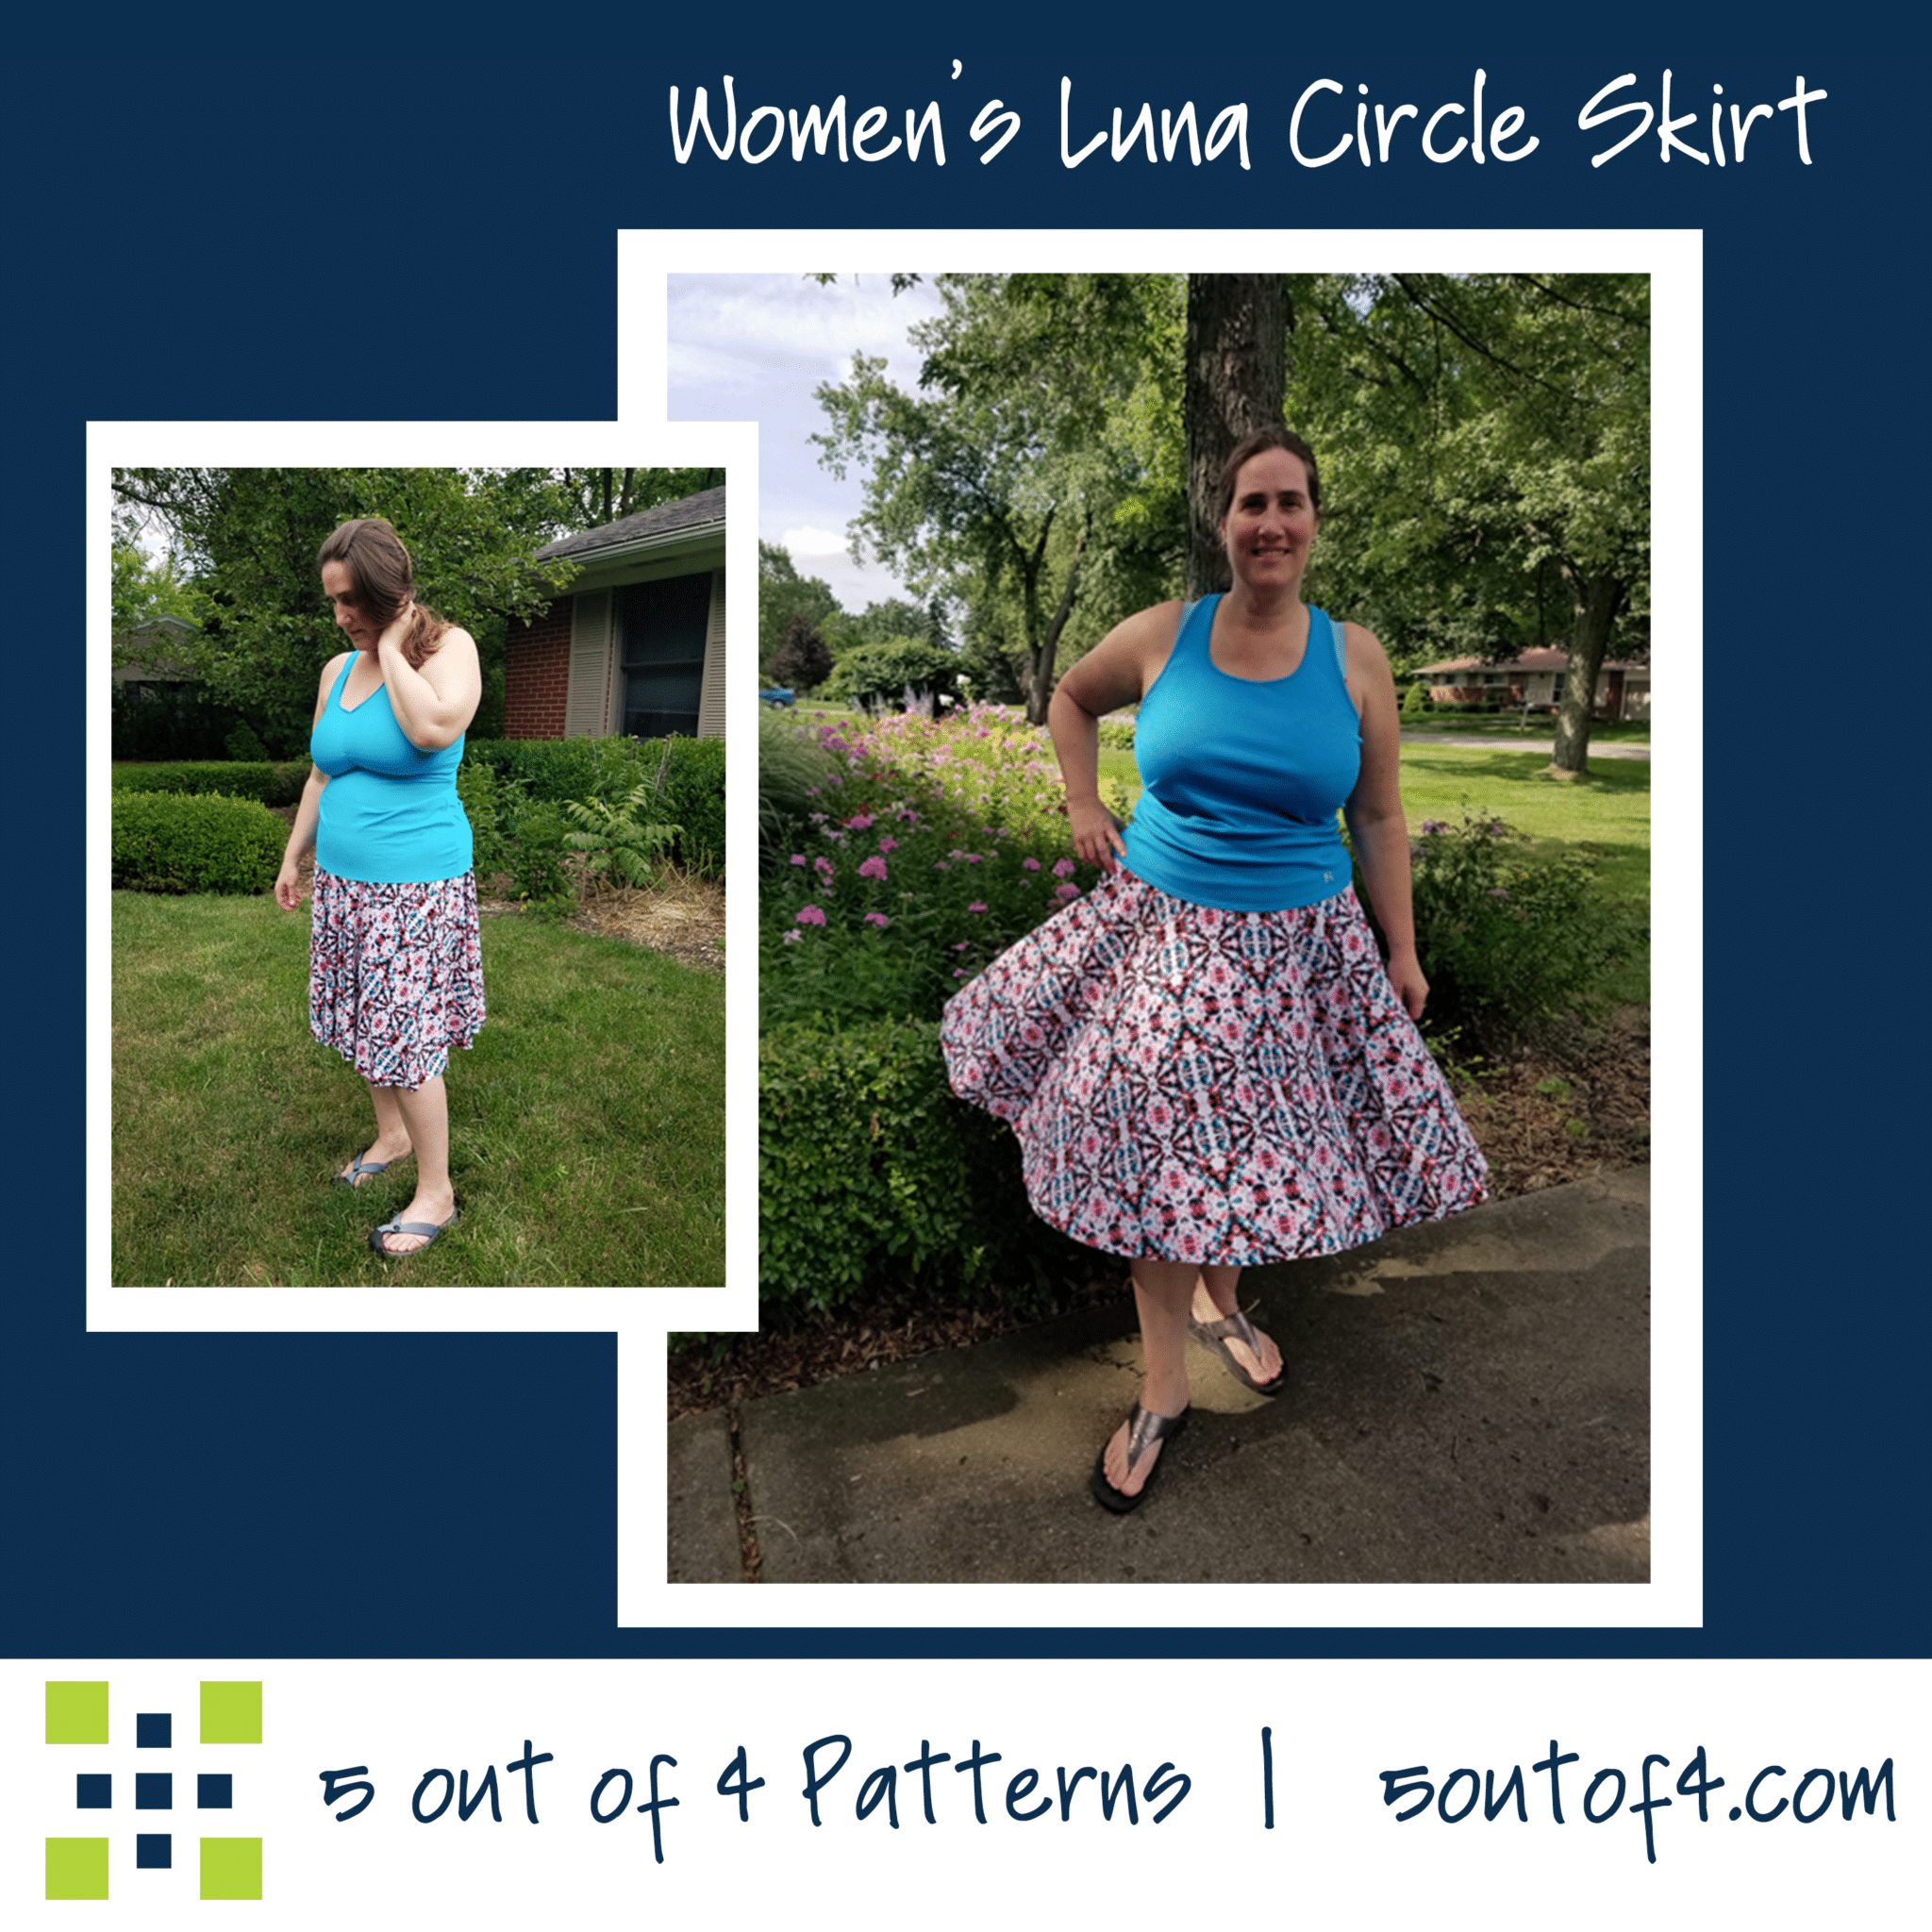 Women's Luna Circle Skirt PDF sewing pattern - 5 out of 4 Patterns